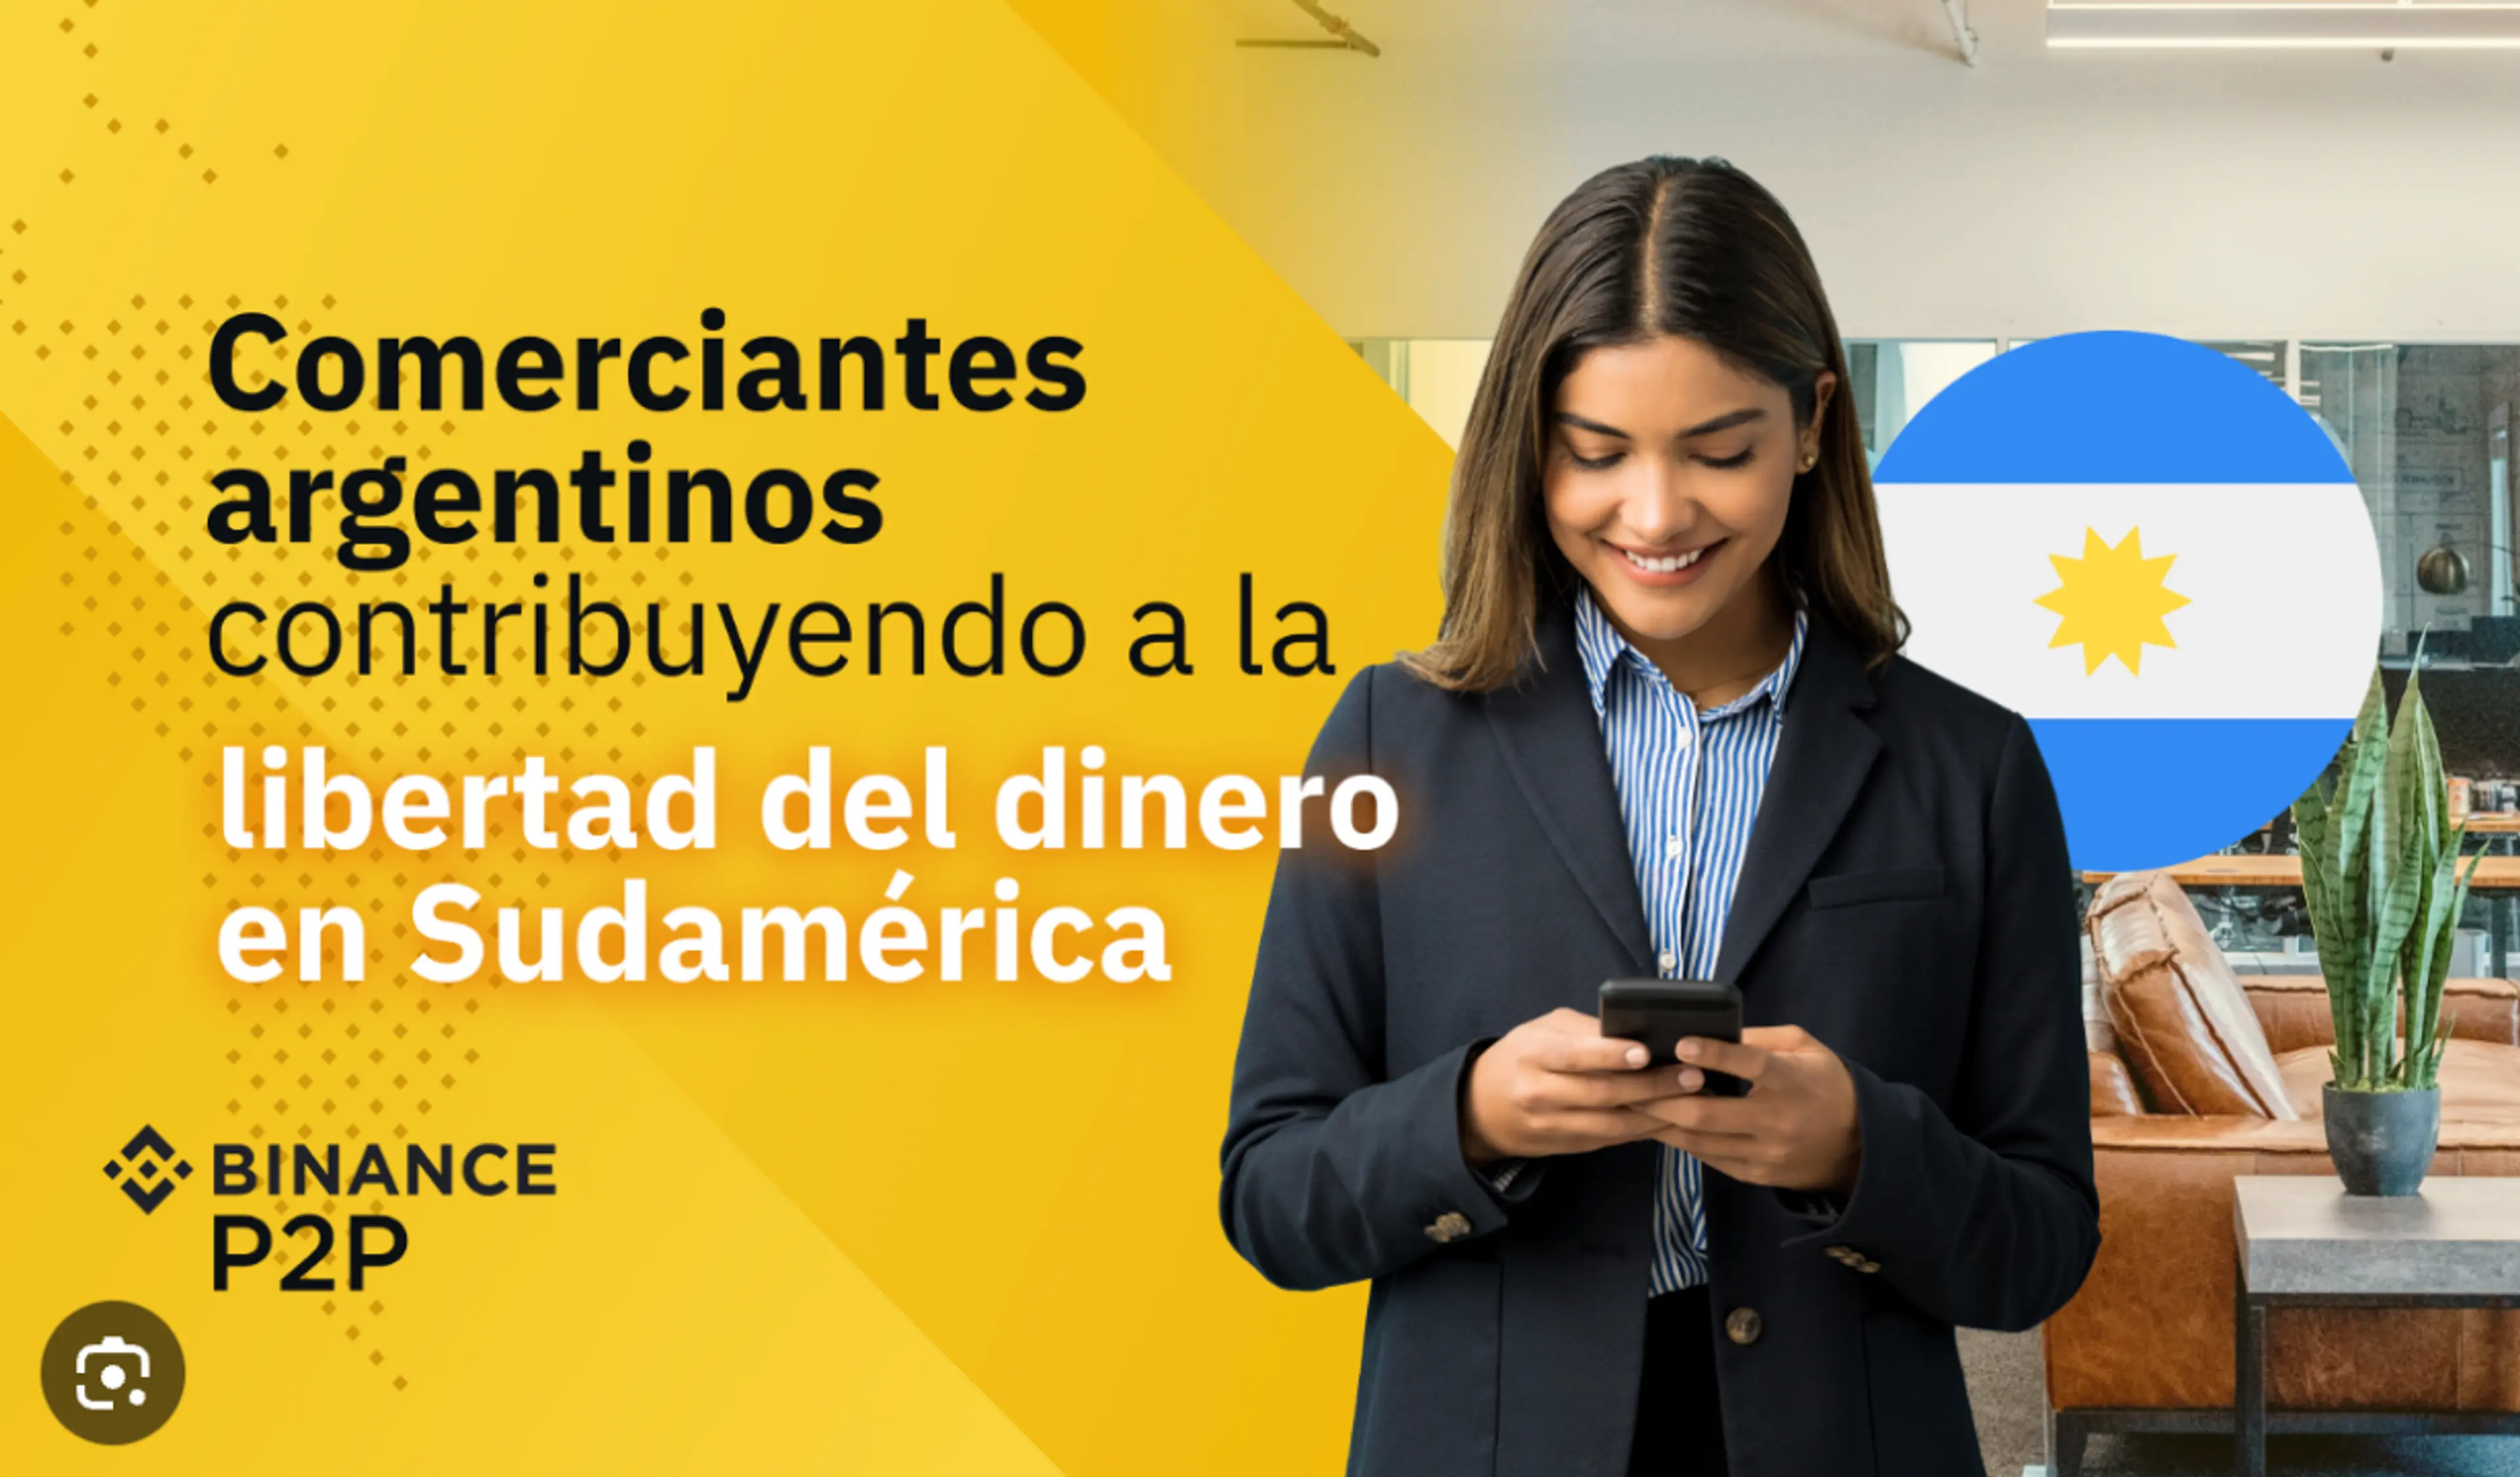 Binance advertisement - Argentine businessmen contribute to financial freedom in Latin America through Binance P2P